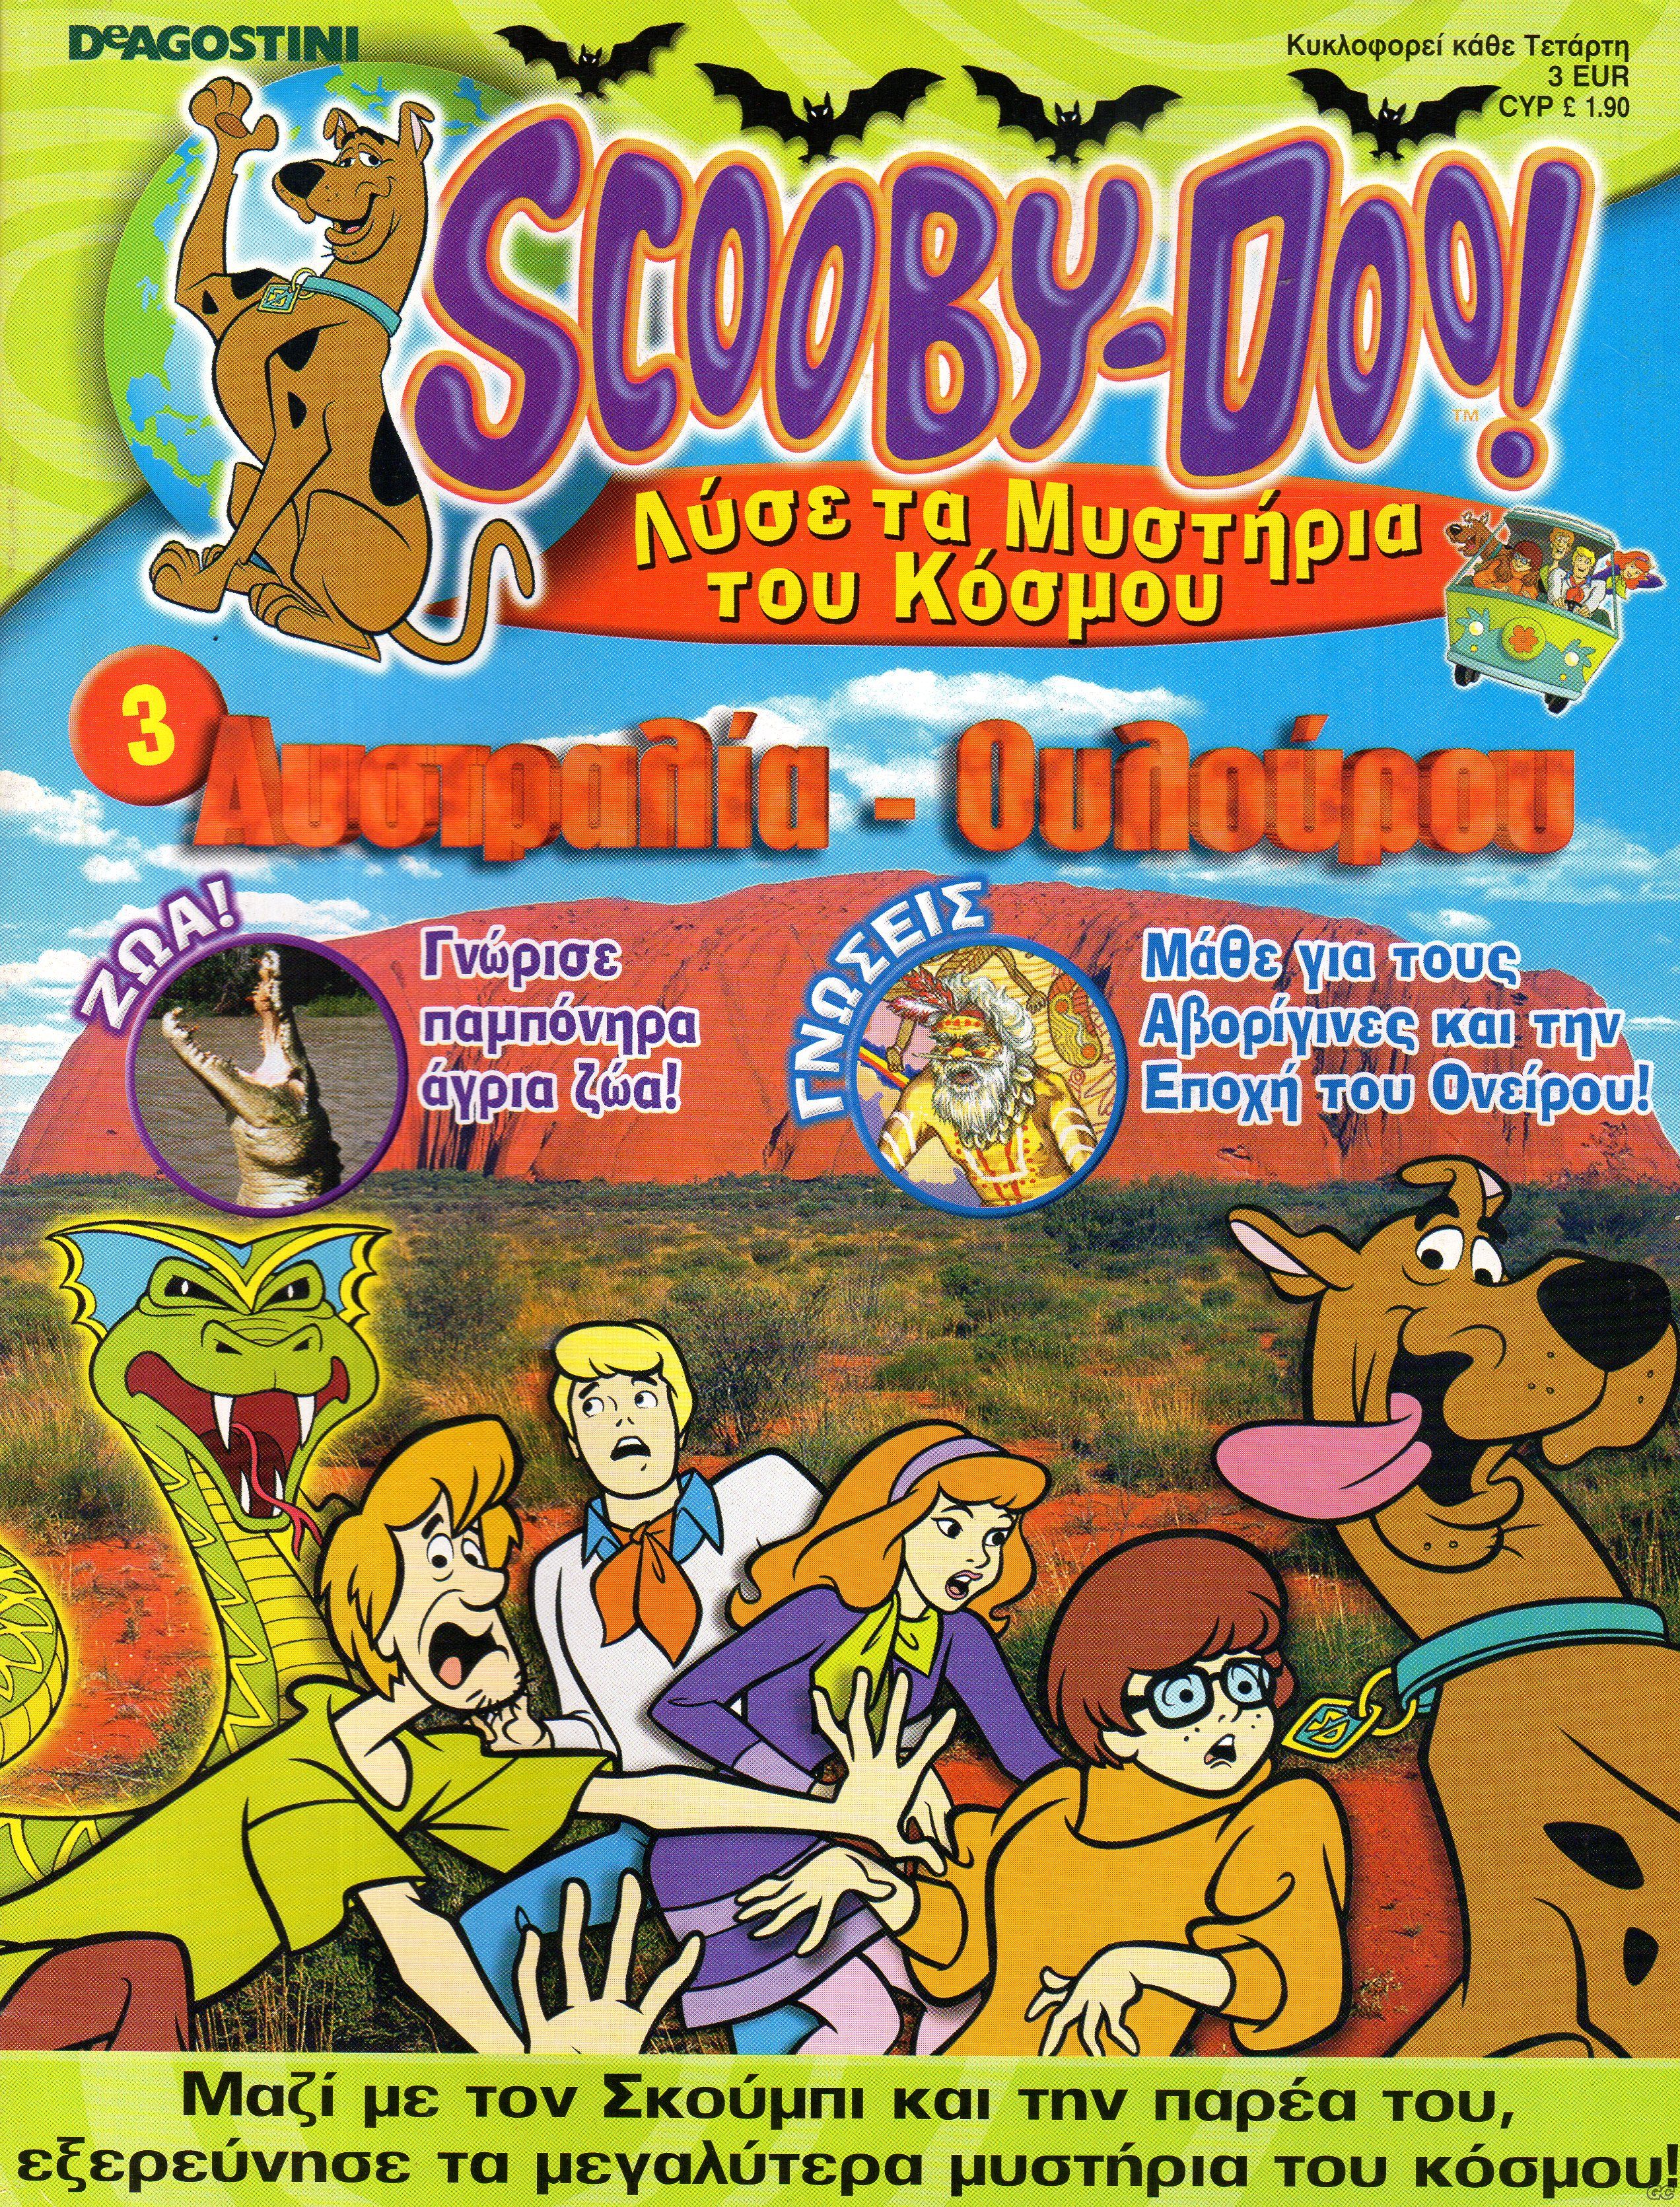 ScoobyDooMystiriaKosmou_0003.jpg